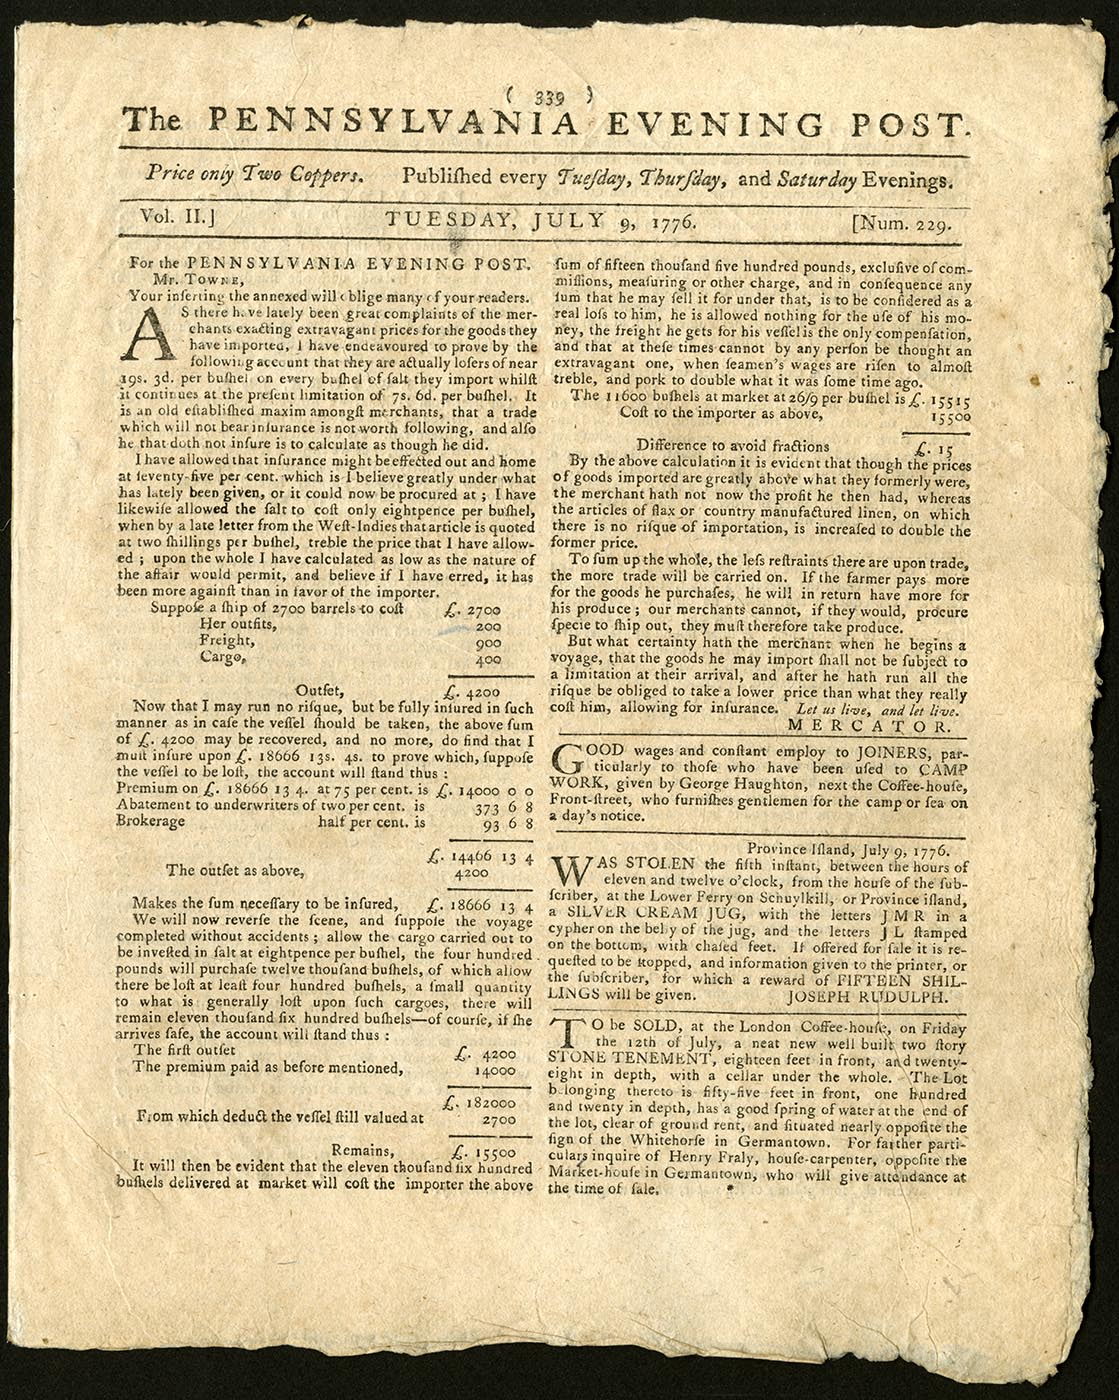 The Pennsylvania Evening Post, July 9, 1776 (The Gilder Lehrman Institute, GLC03235.229)